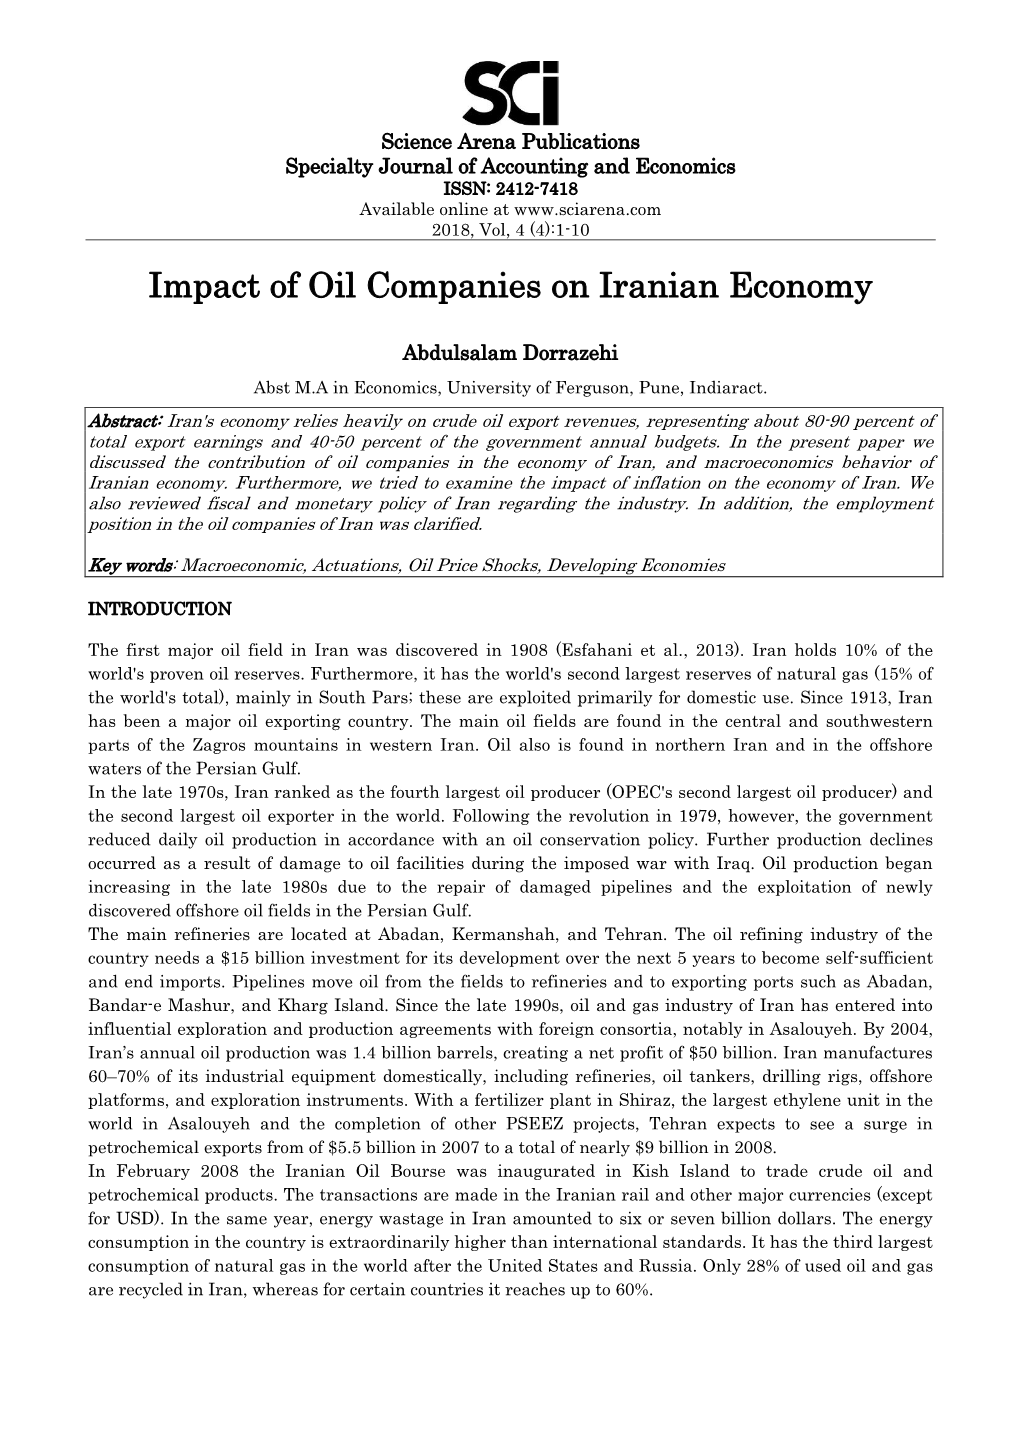 Impact of Oil Companies on Iranian Economy